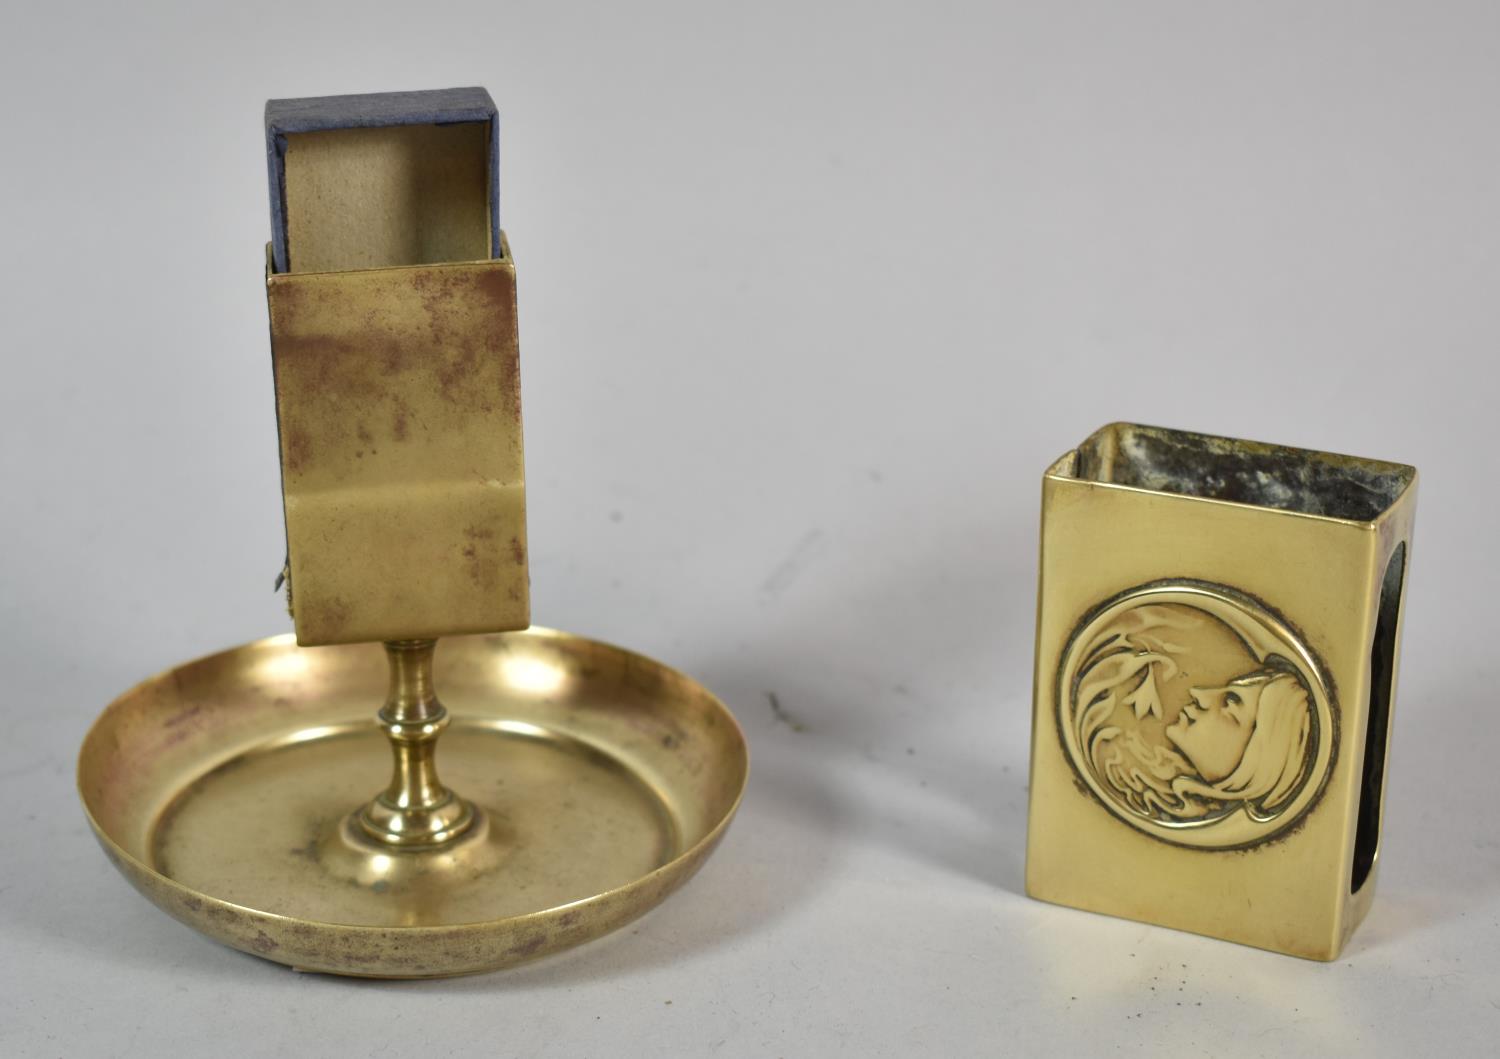 A Brass Match Box Holder with Circular Tray Base Together with an Art Nouveau Brass Match Box Holder